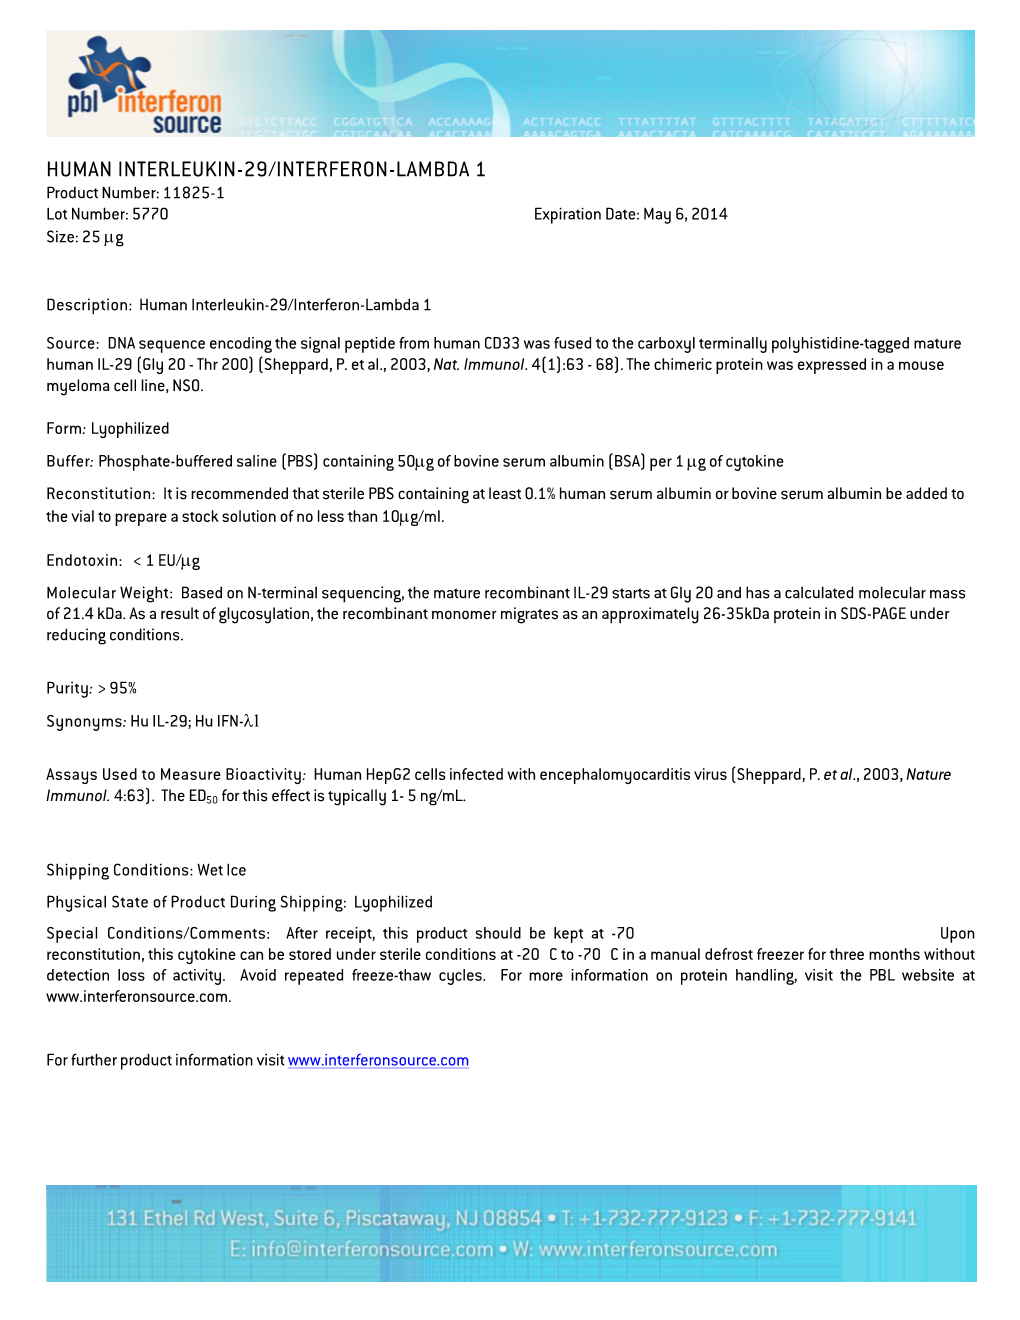 HUMAN INTERLEUKIN-29/INTERFERON-LAMBDA 1 Product Number: 11825-1 Lot Number: 5770 Expiration Date: May 6, 2014 Size: 25 Μg